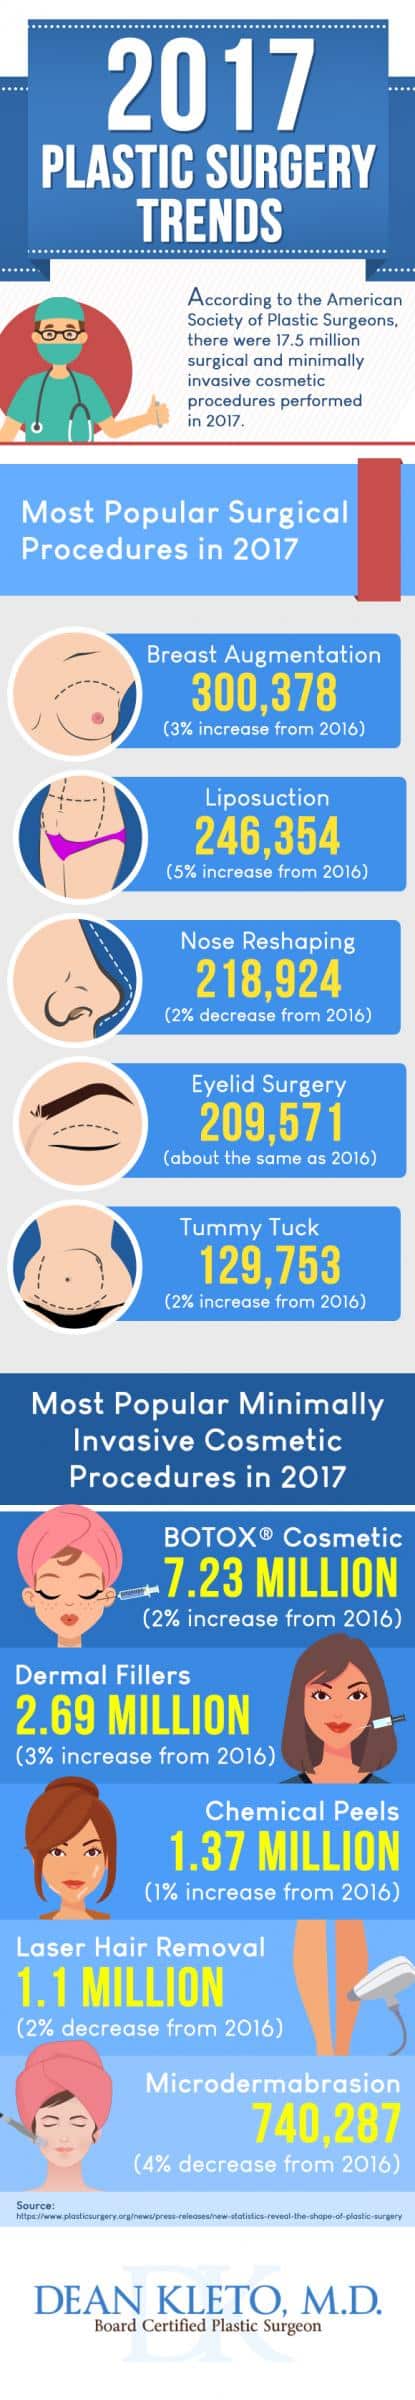 2017 Plastic Surgery Trends infographic - Knoxville plastic surgeon Dr. Dean Kleto